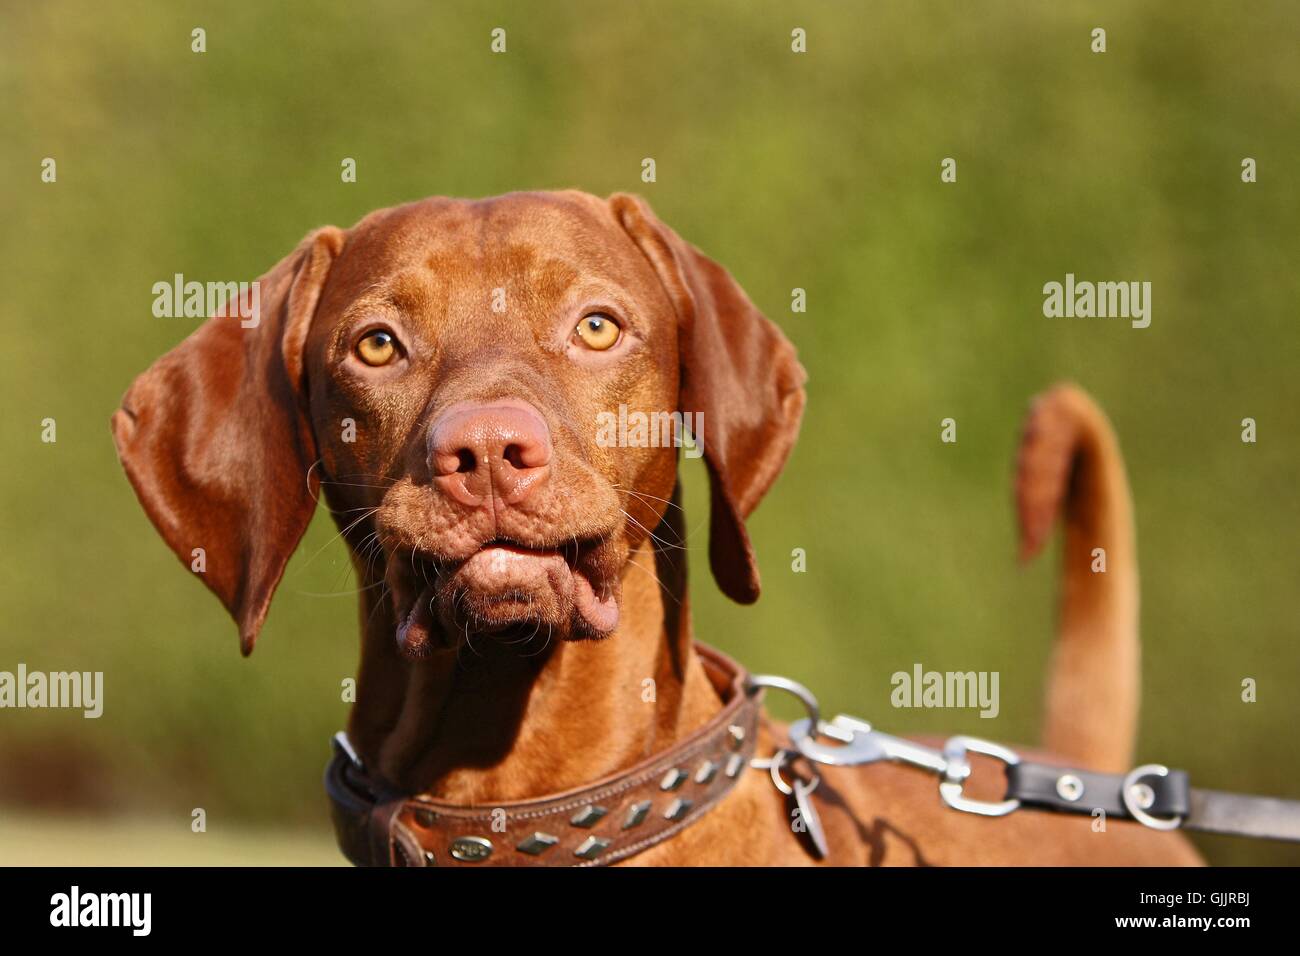 portrait dog leash Stock Photo